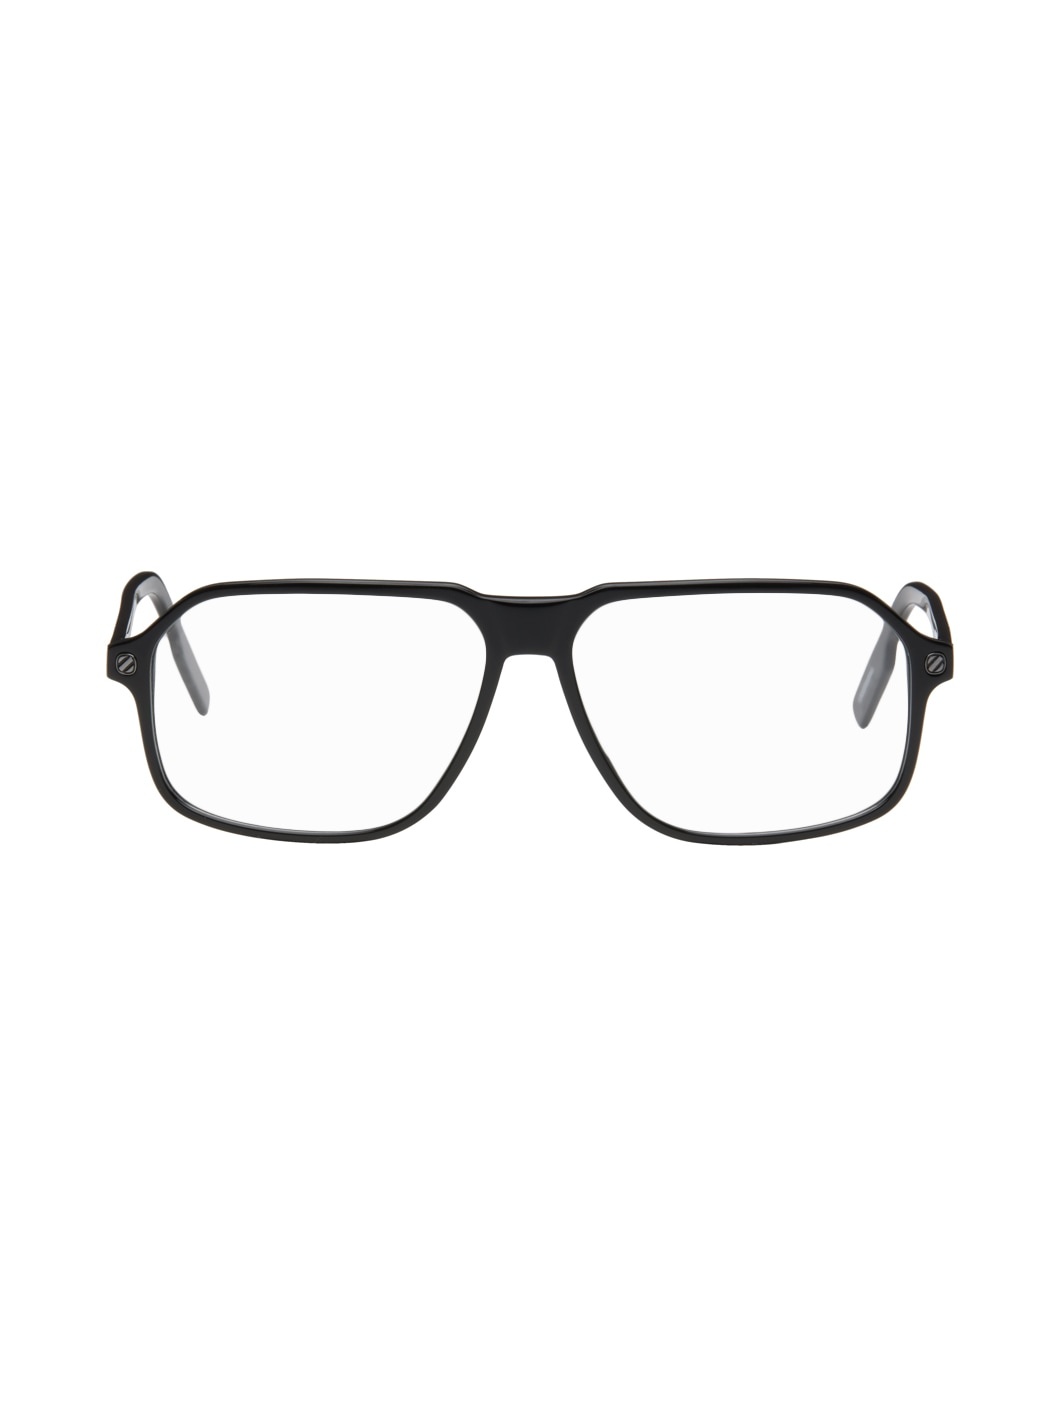 Black Square Glasses - 1